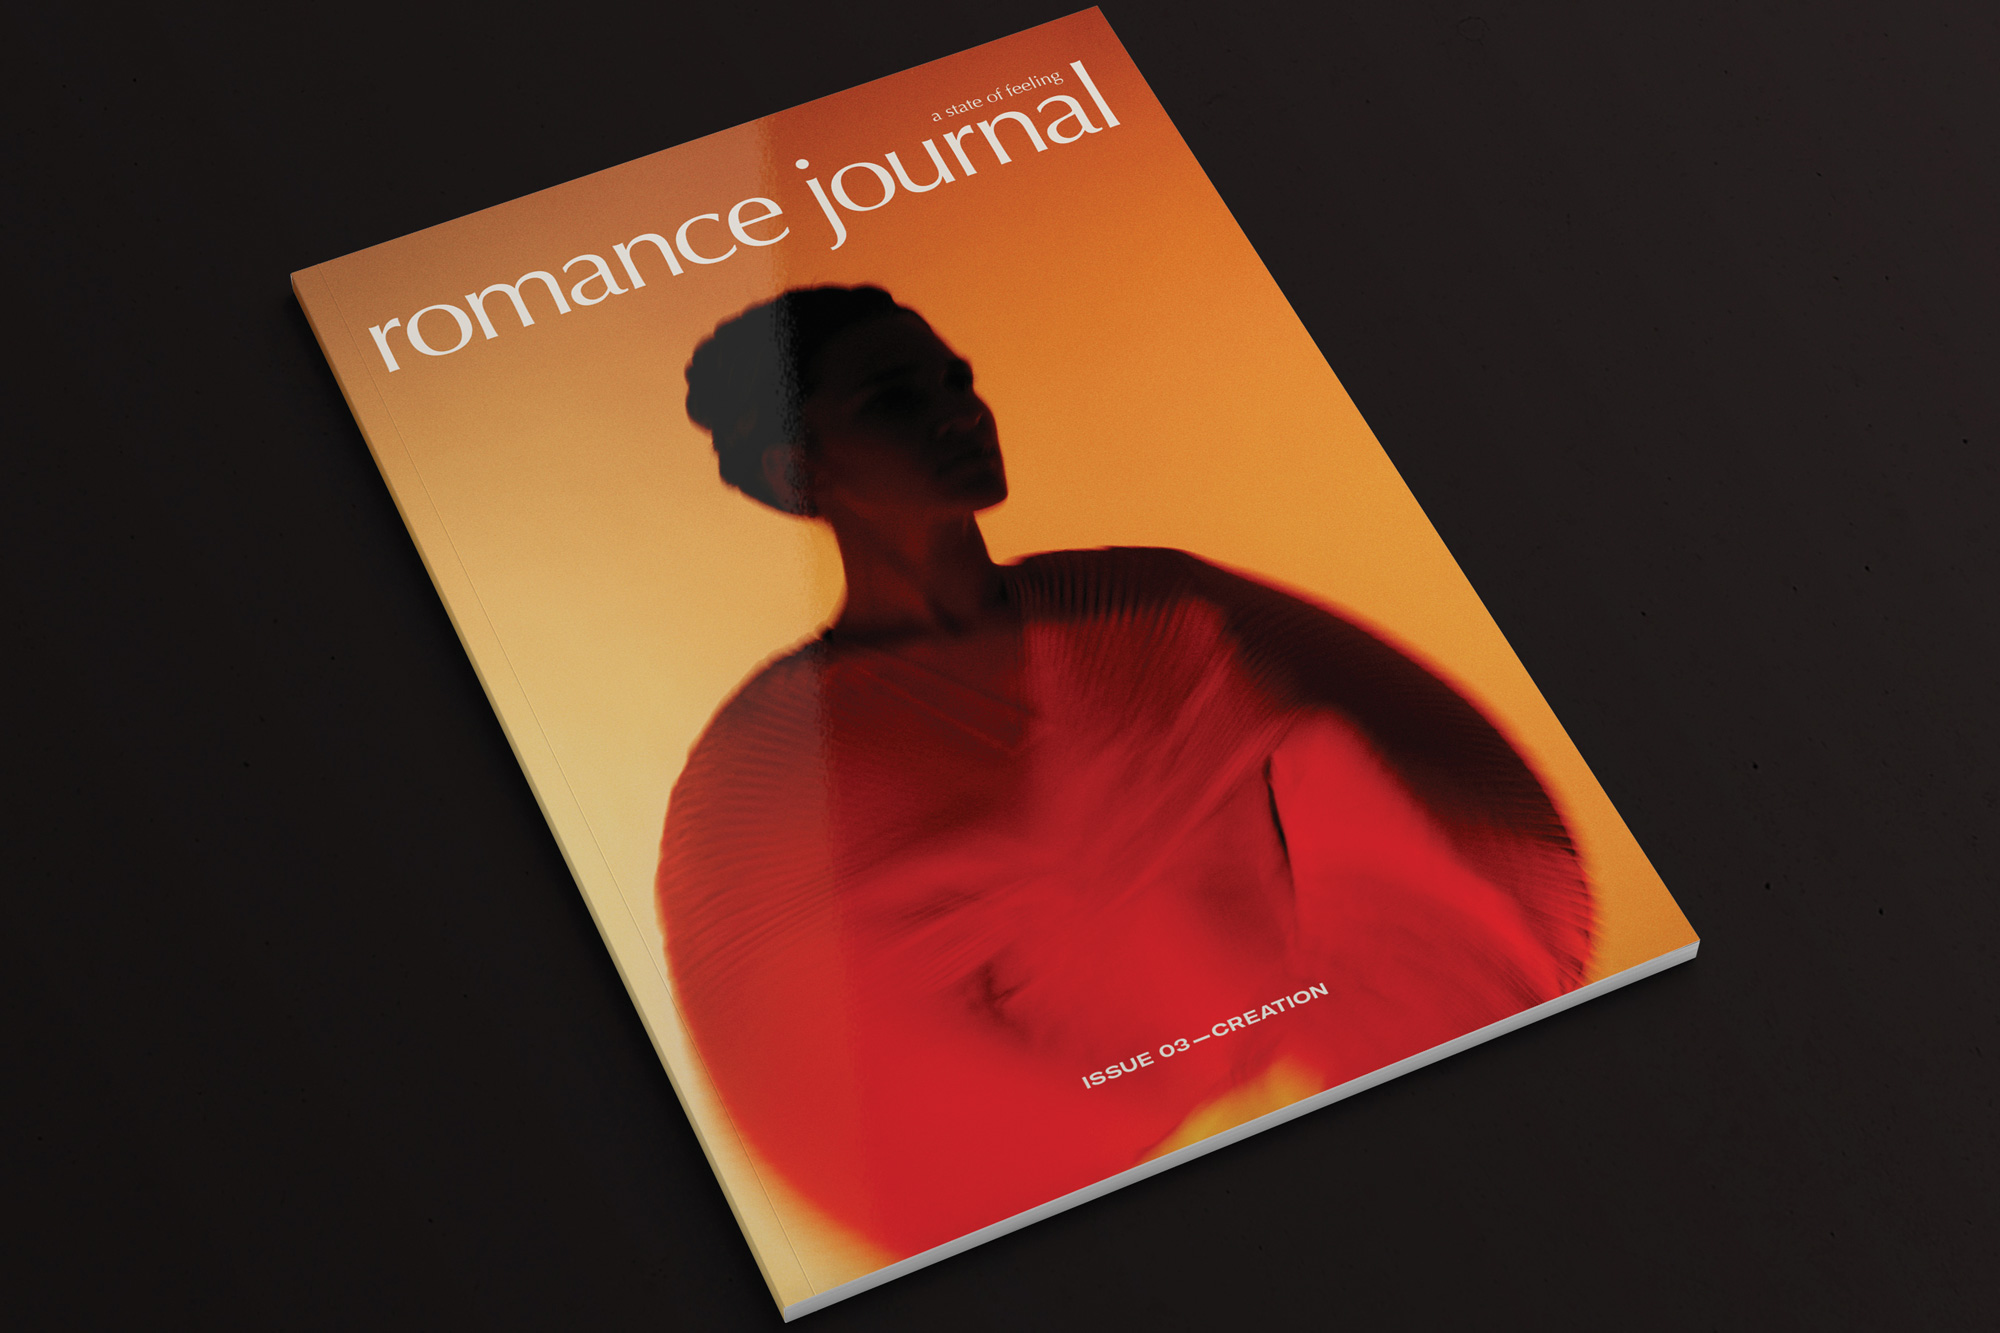 sixtysix romance journal cover